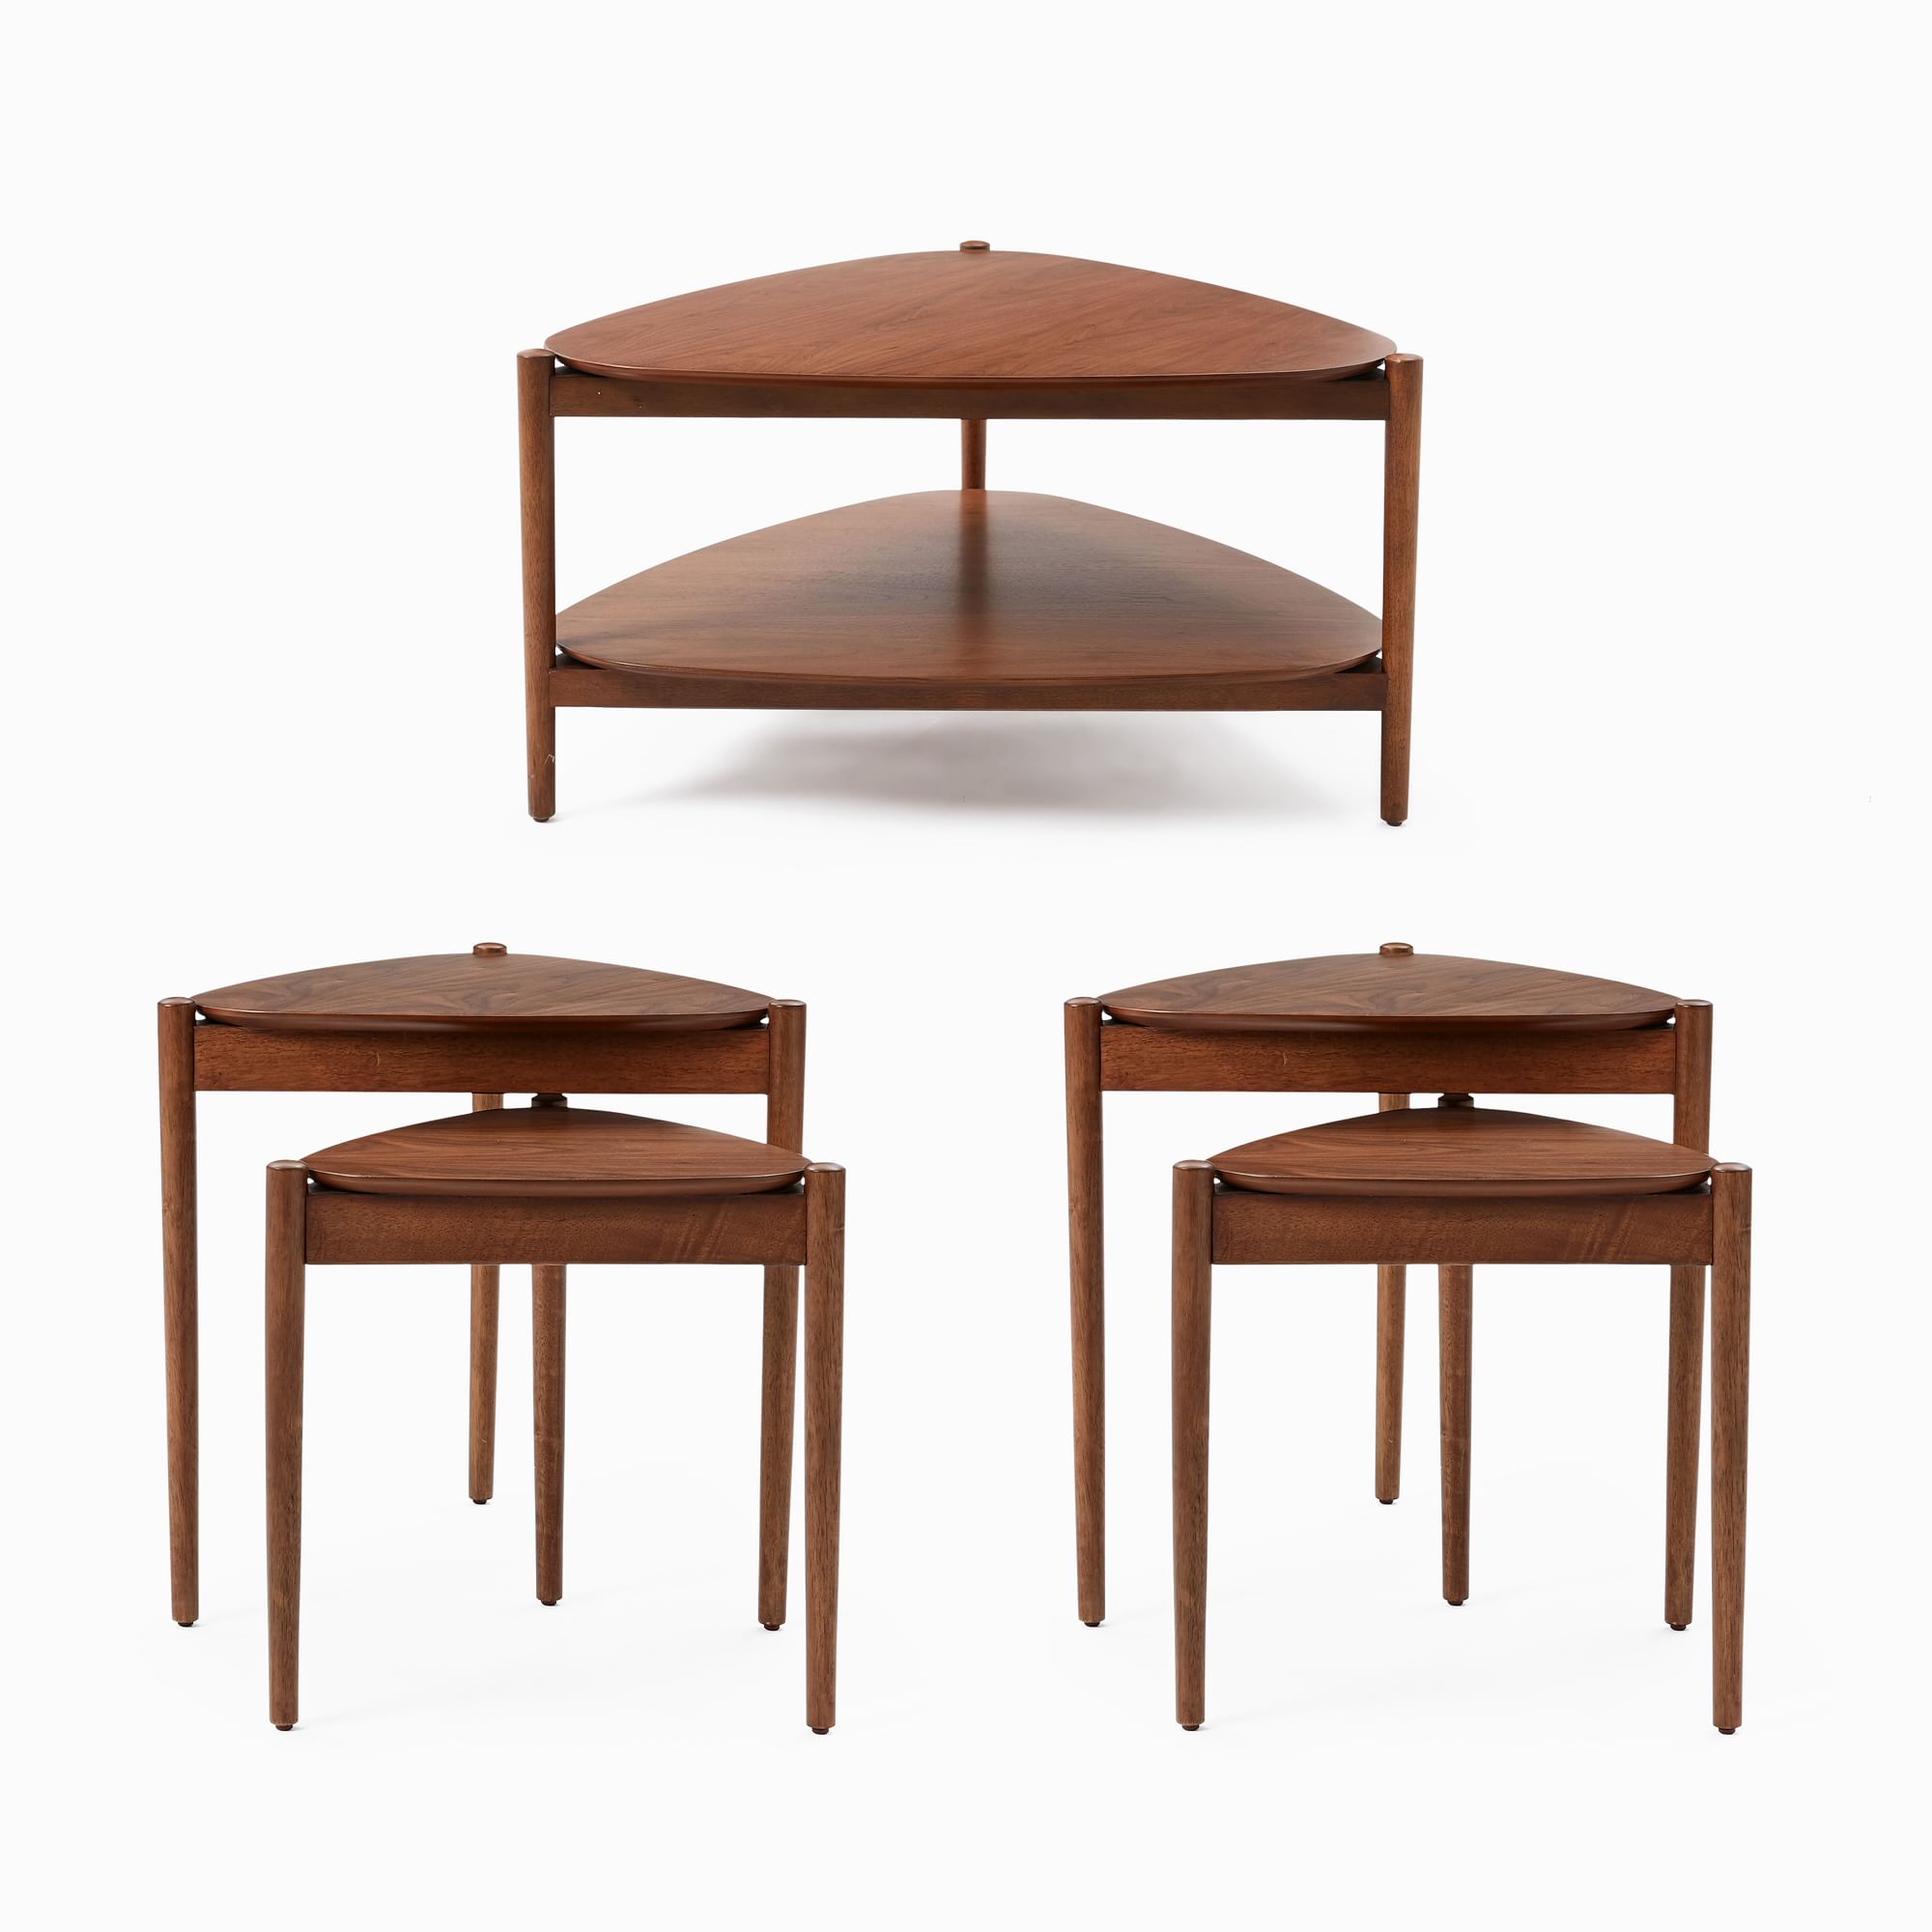 Retro Tripod Coffee Table & 2 Nesting Tables Set | Modern Living Room Furniture | West Elm